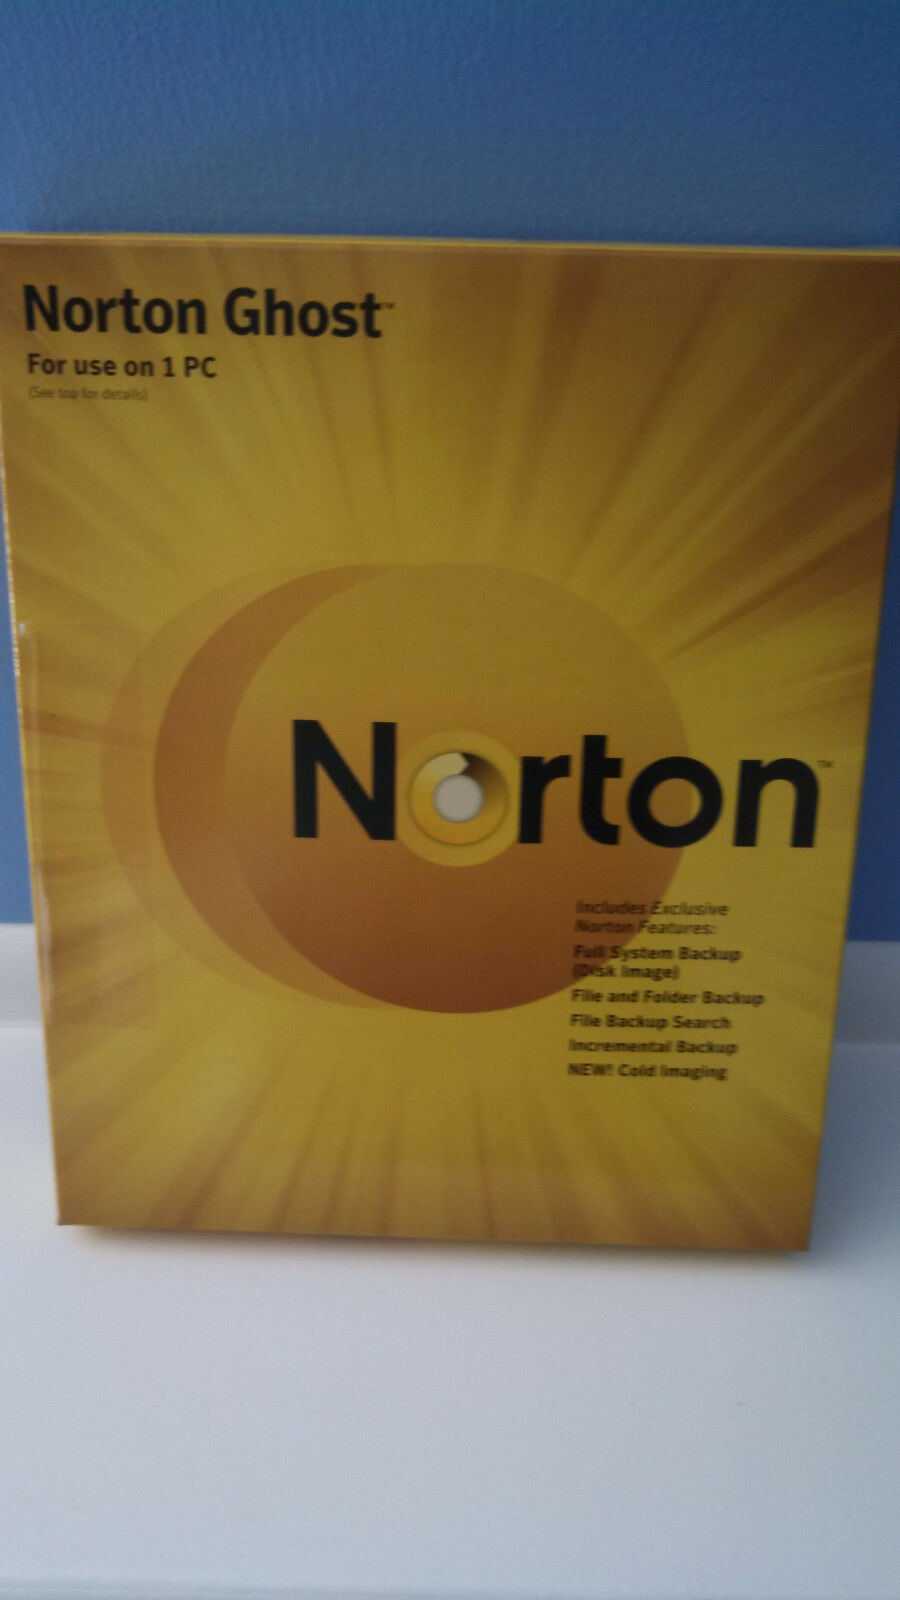 Norton Ghost 15 15.0 Full Version Cd & Product Key